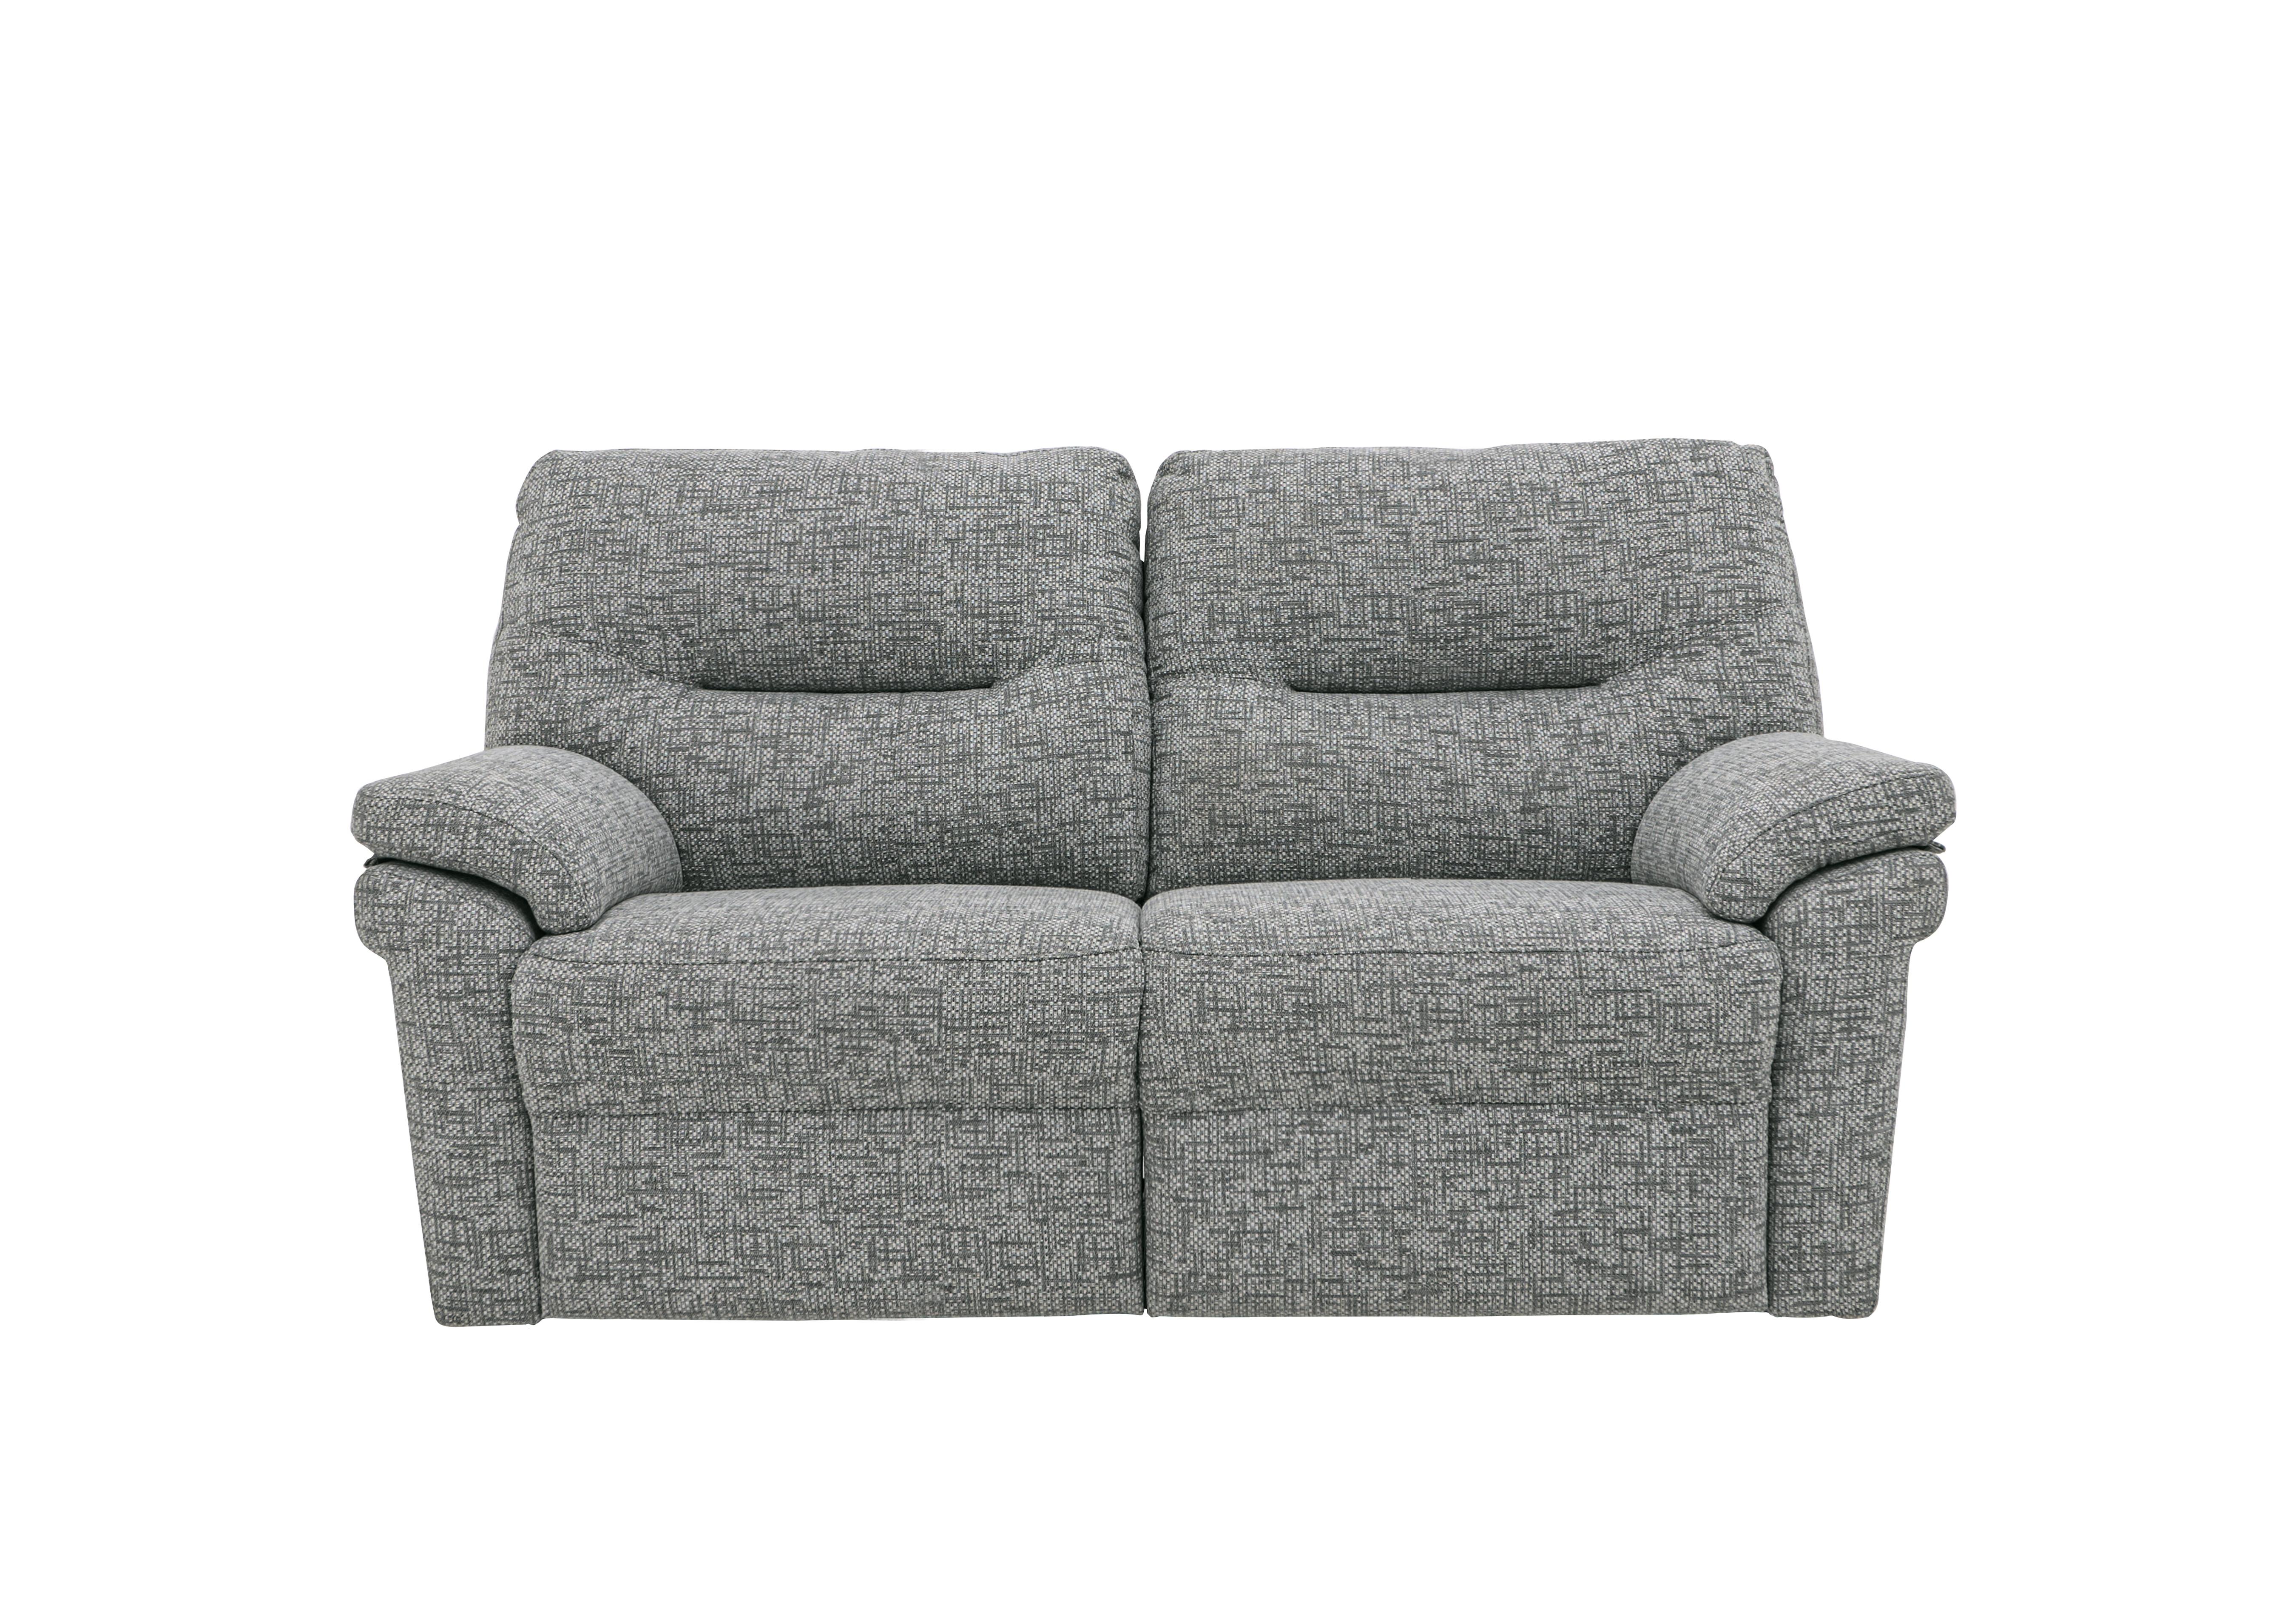 Seattle 2 Seater Fabric Sofa in B030 Remco Light Grey on Furniture Village